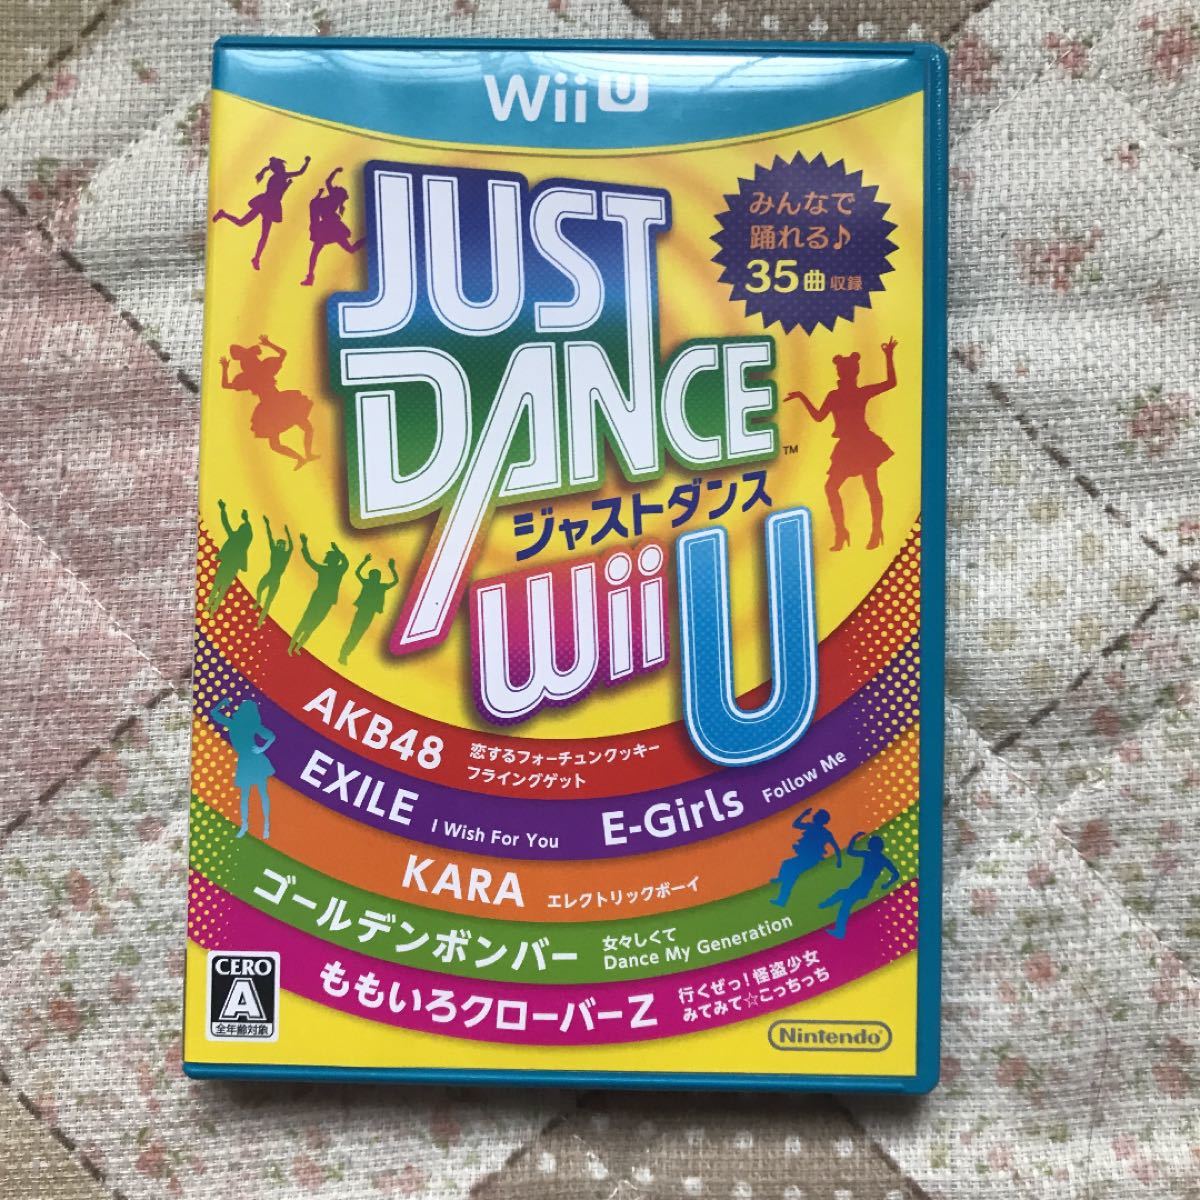 Paypayフリマ ジャストダンス Wiiu Just Dance Wii